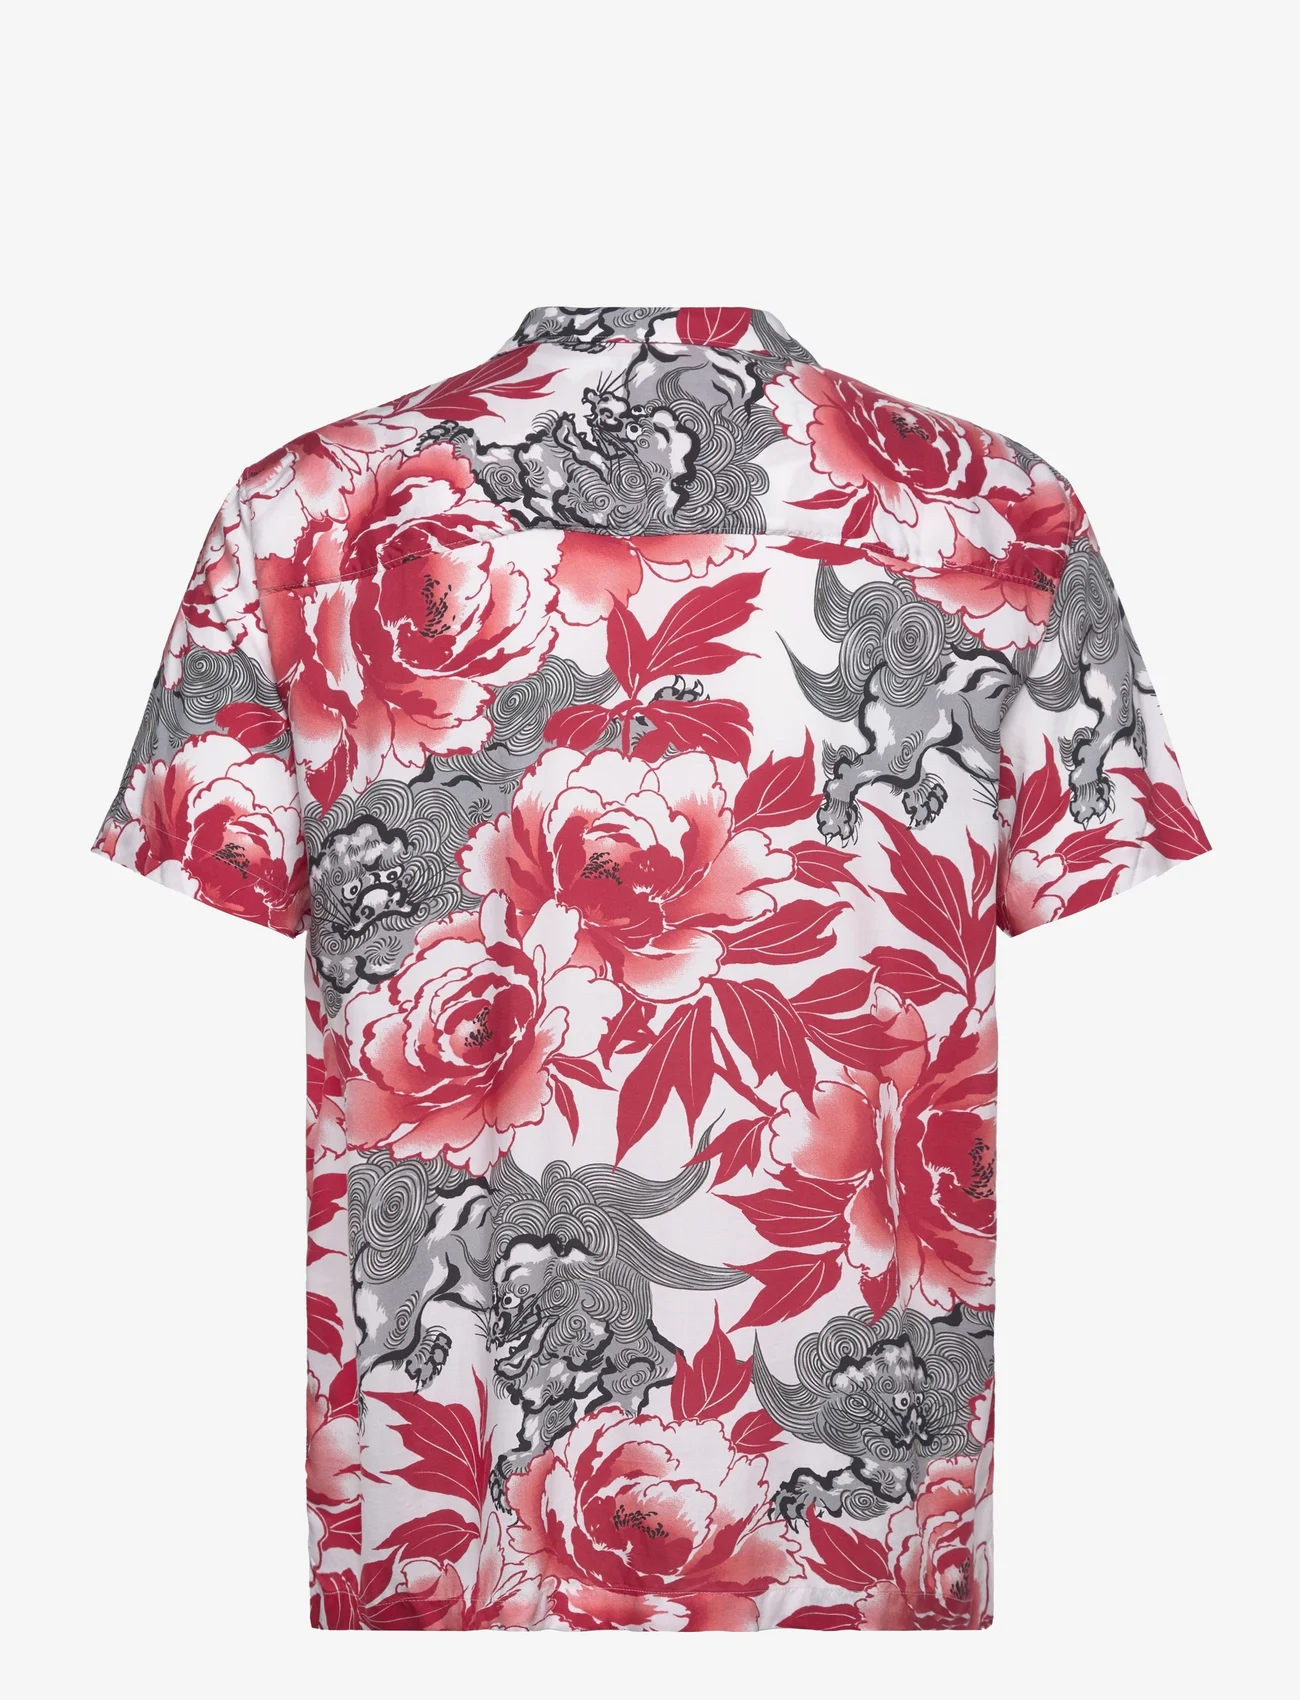 Superdry - HAWAIIAN RESORT SHIRT - kortärmade t-shirts - karashishi red - 1